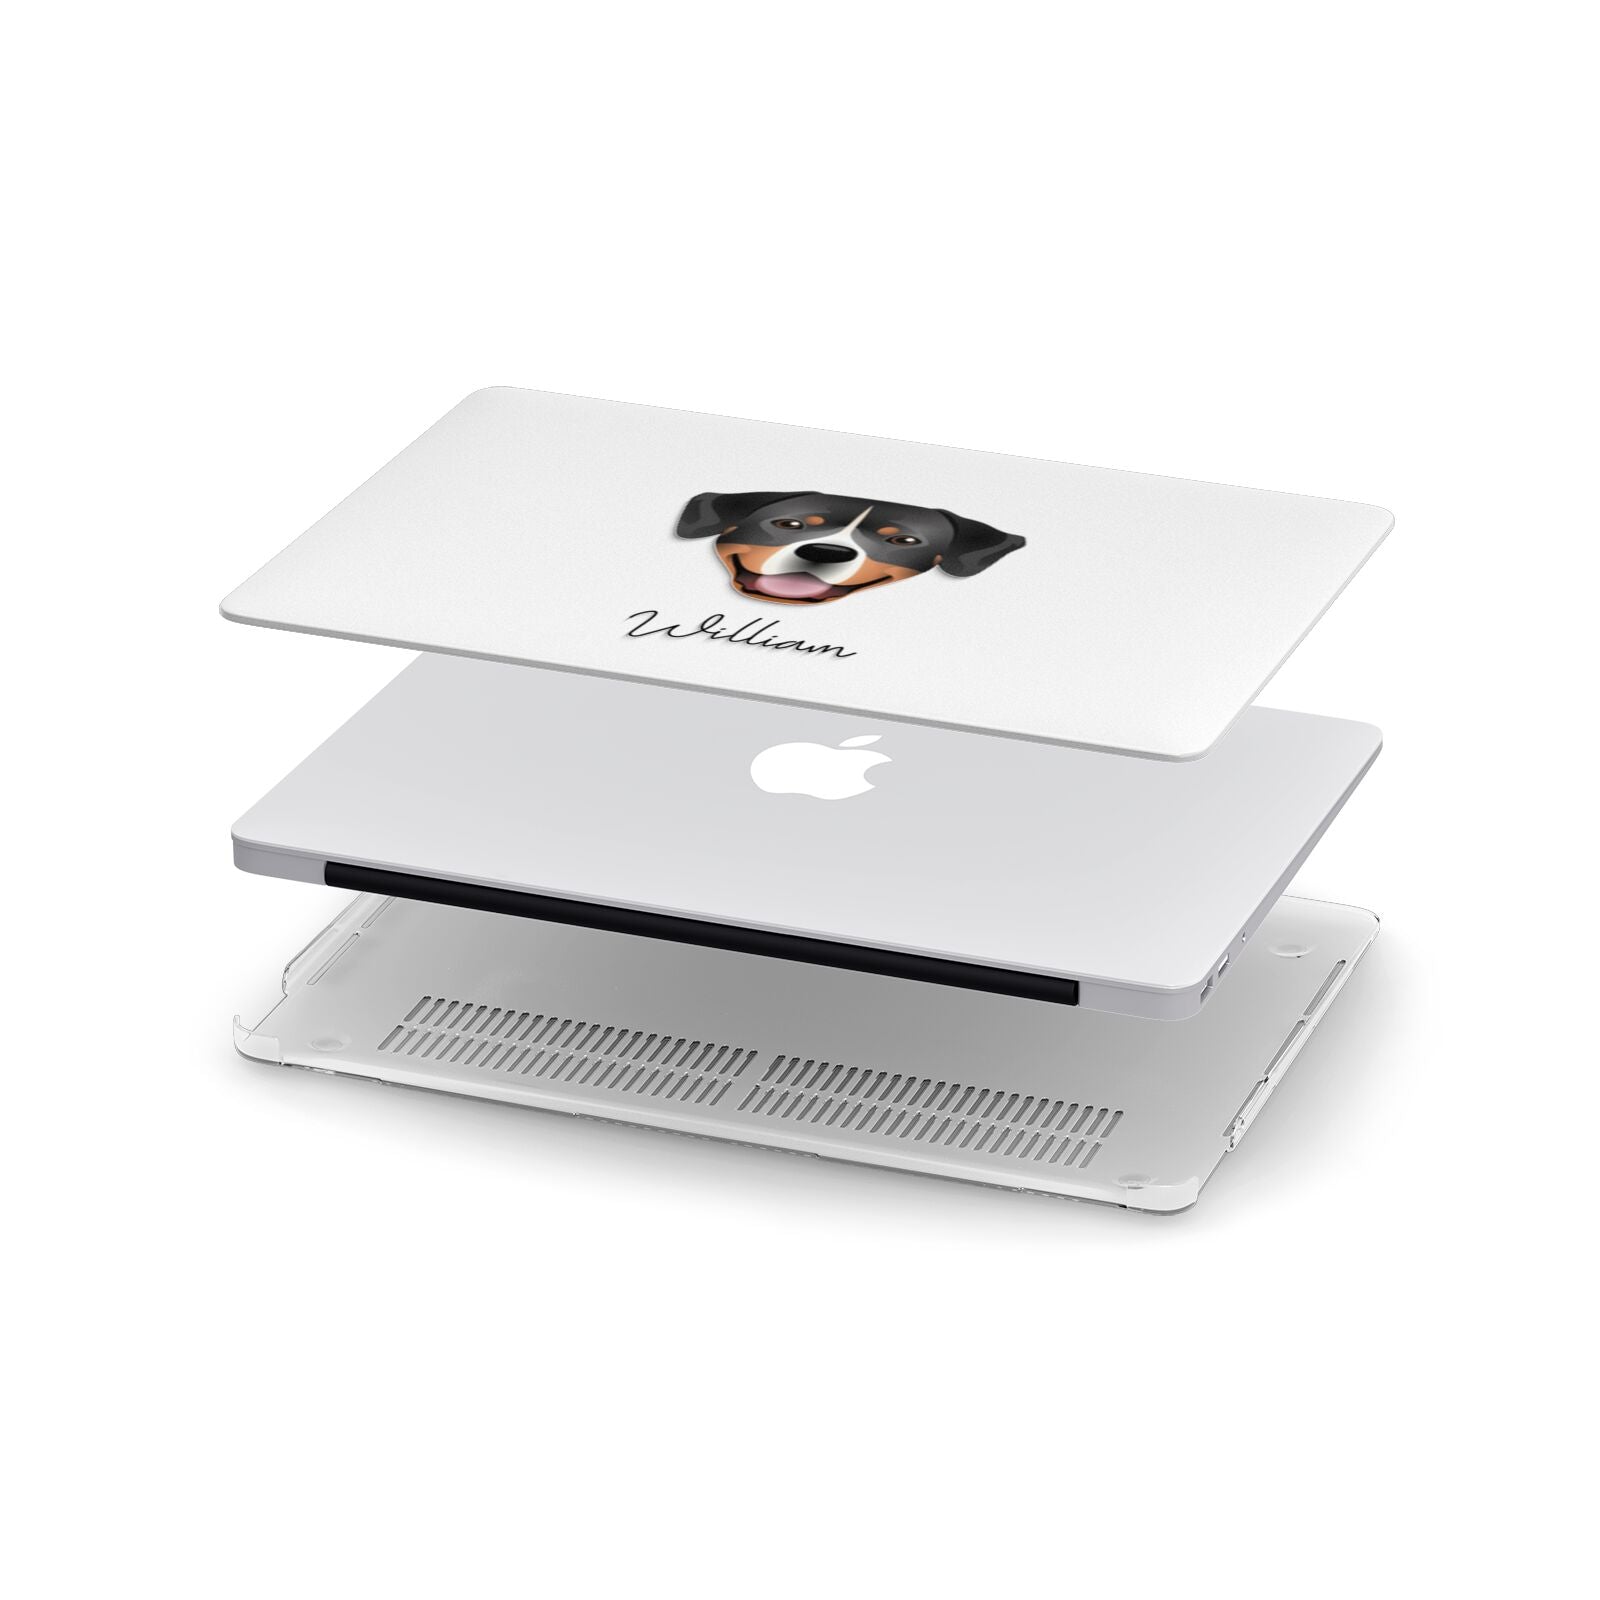 Entlebucher Mountain Dog Personalised Apple MacBook Case in Detail